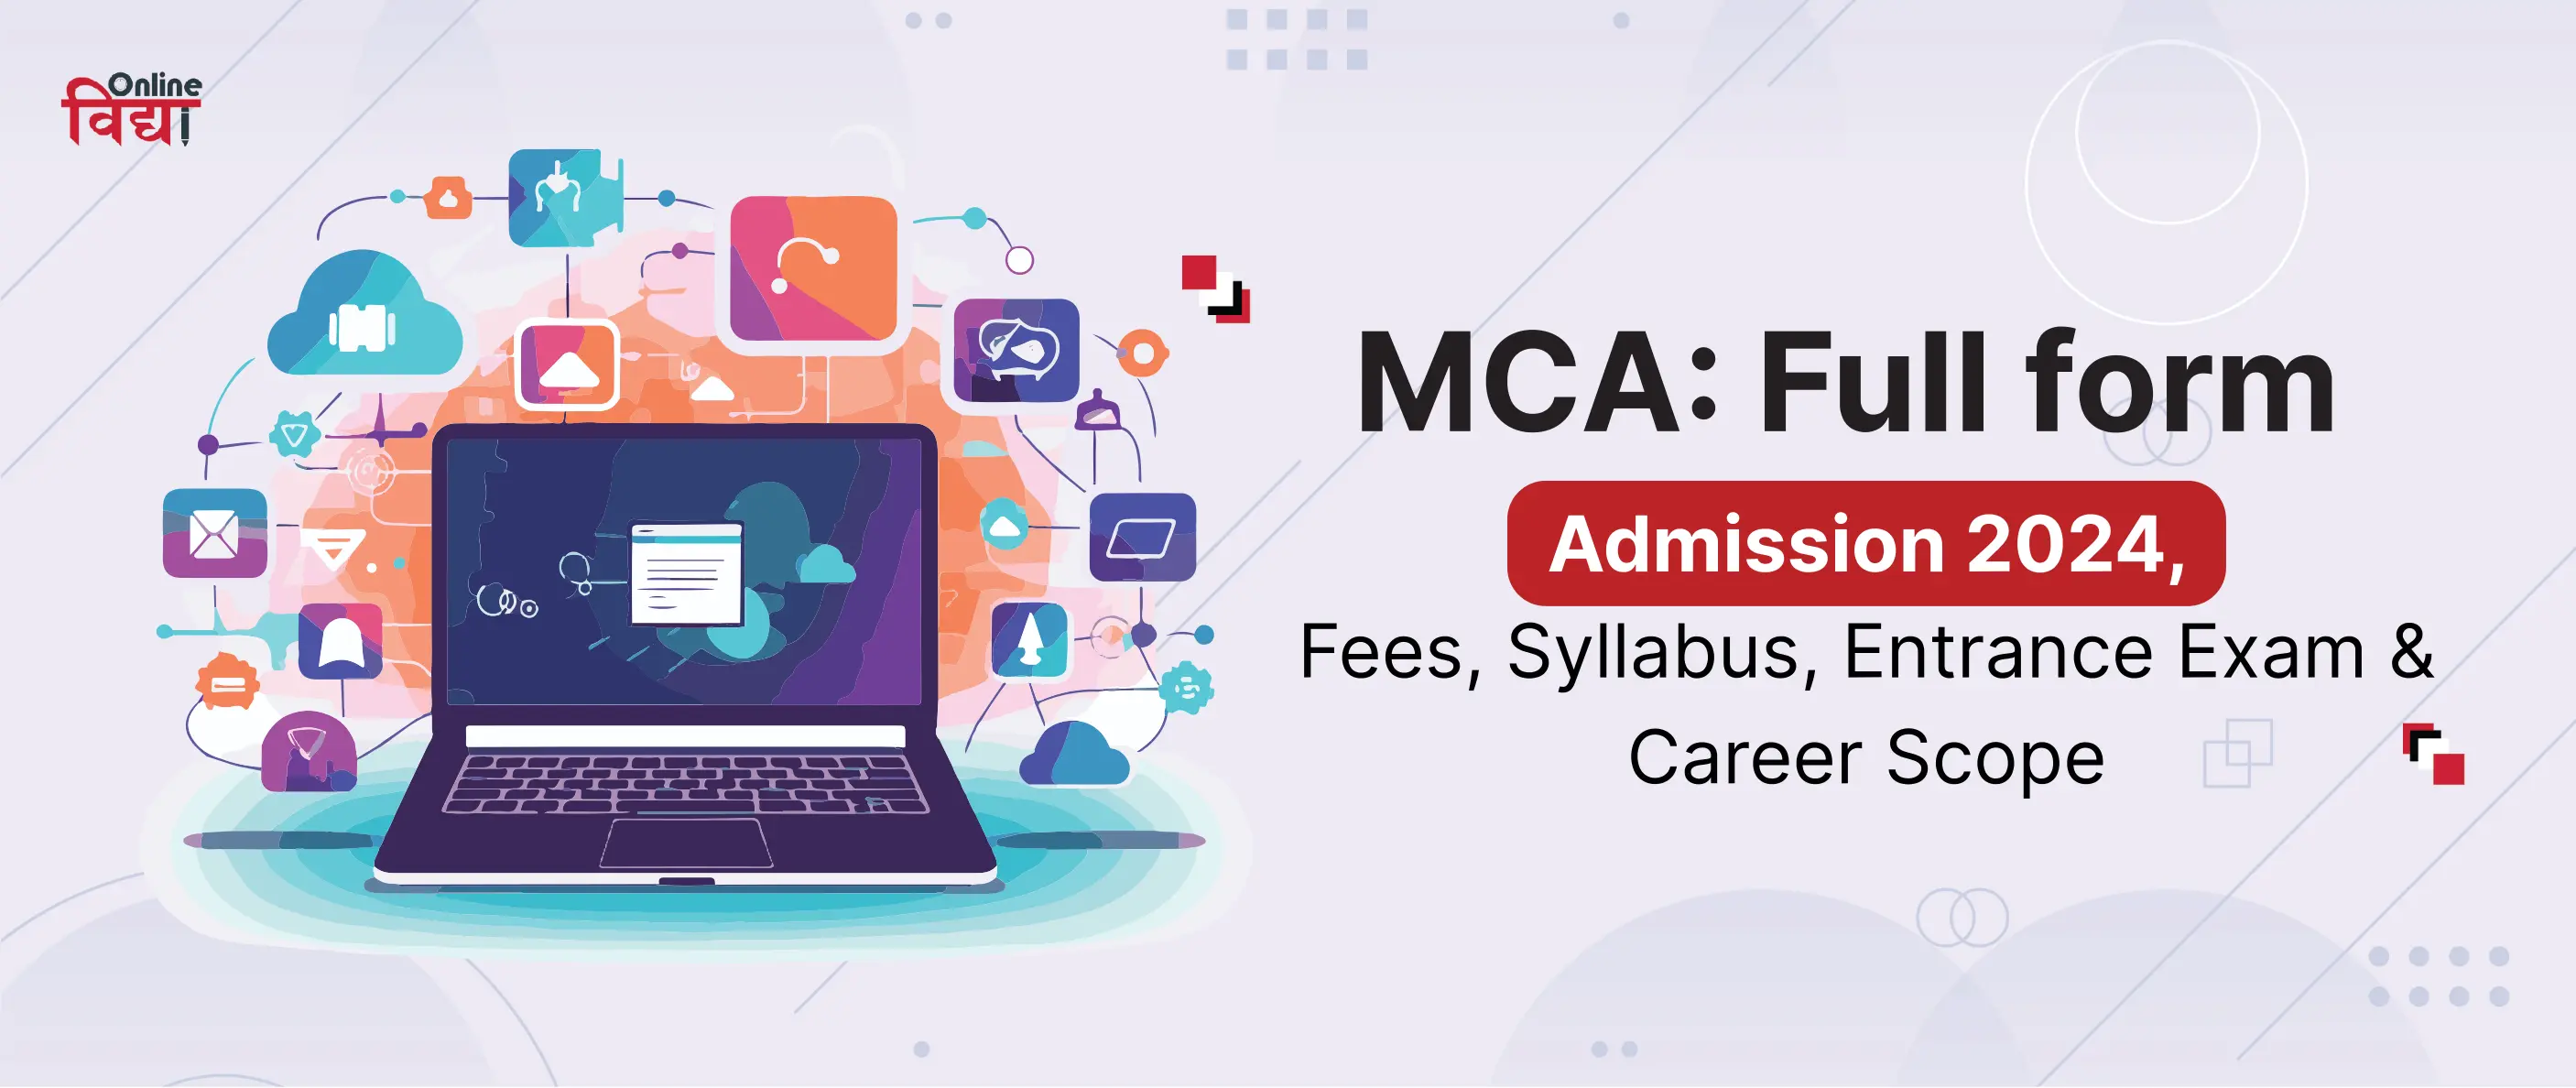 MCA: Full form, Admission 2024, Fees, Syllabus, Entrance Exam & Career Scope